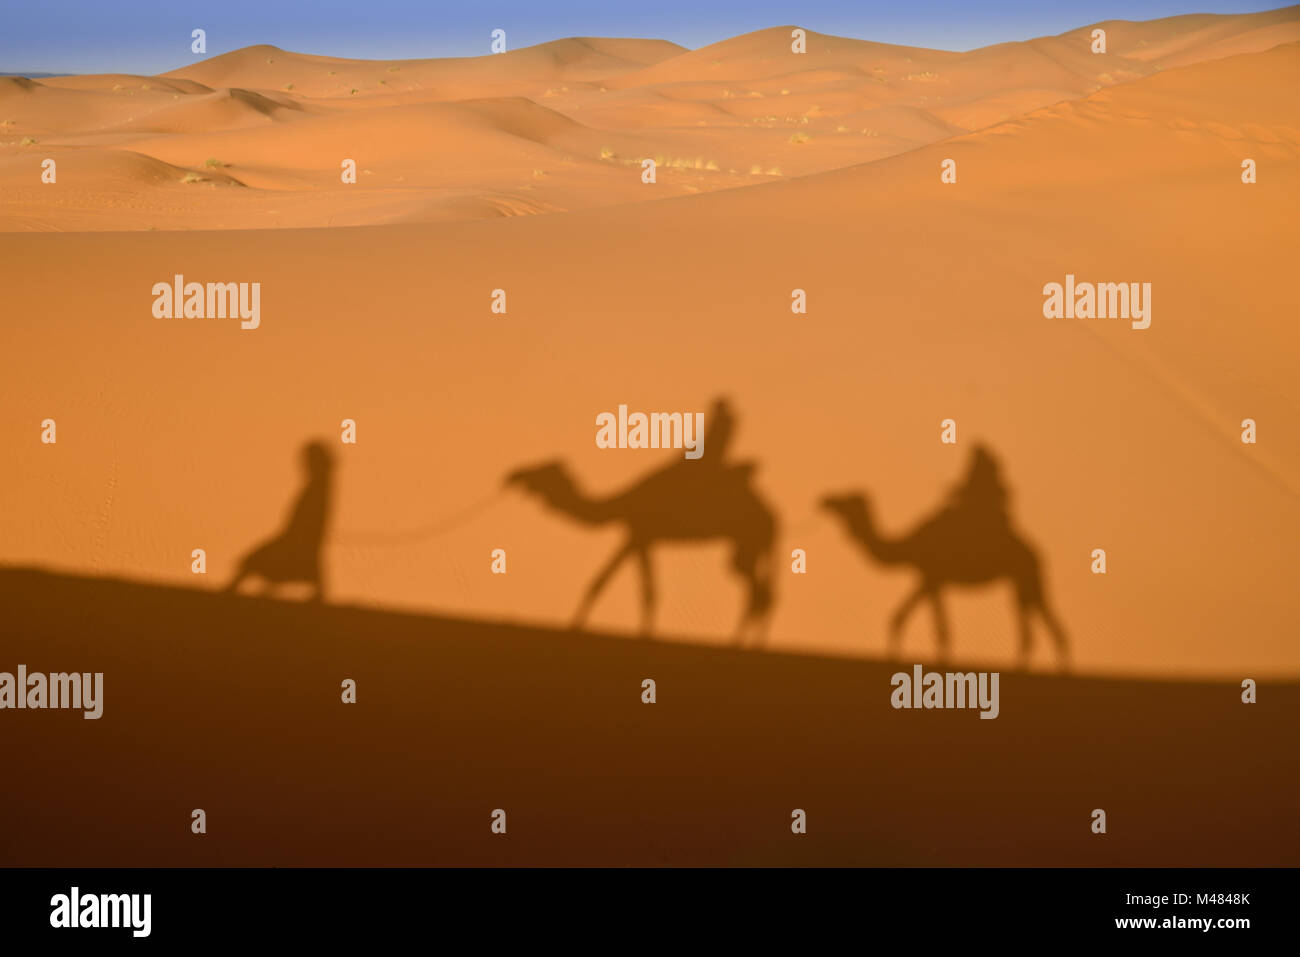 Camel shadows on Sahara Desert sand in Morocco. Stock Photo